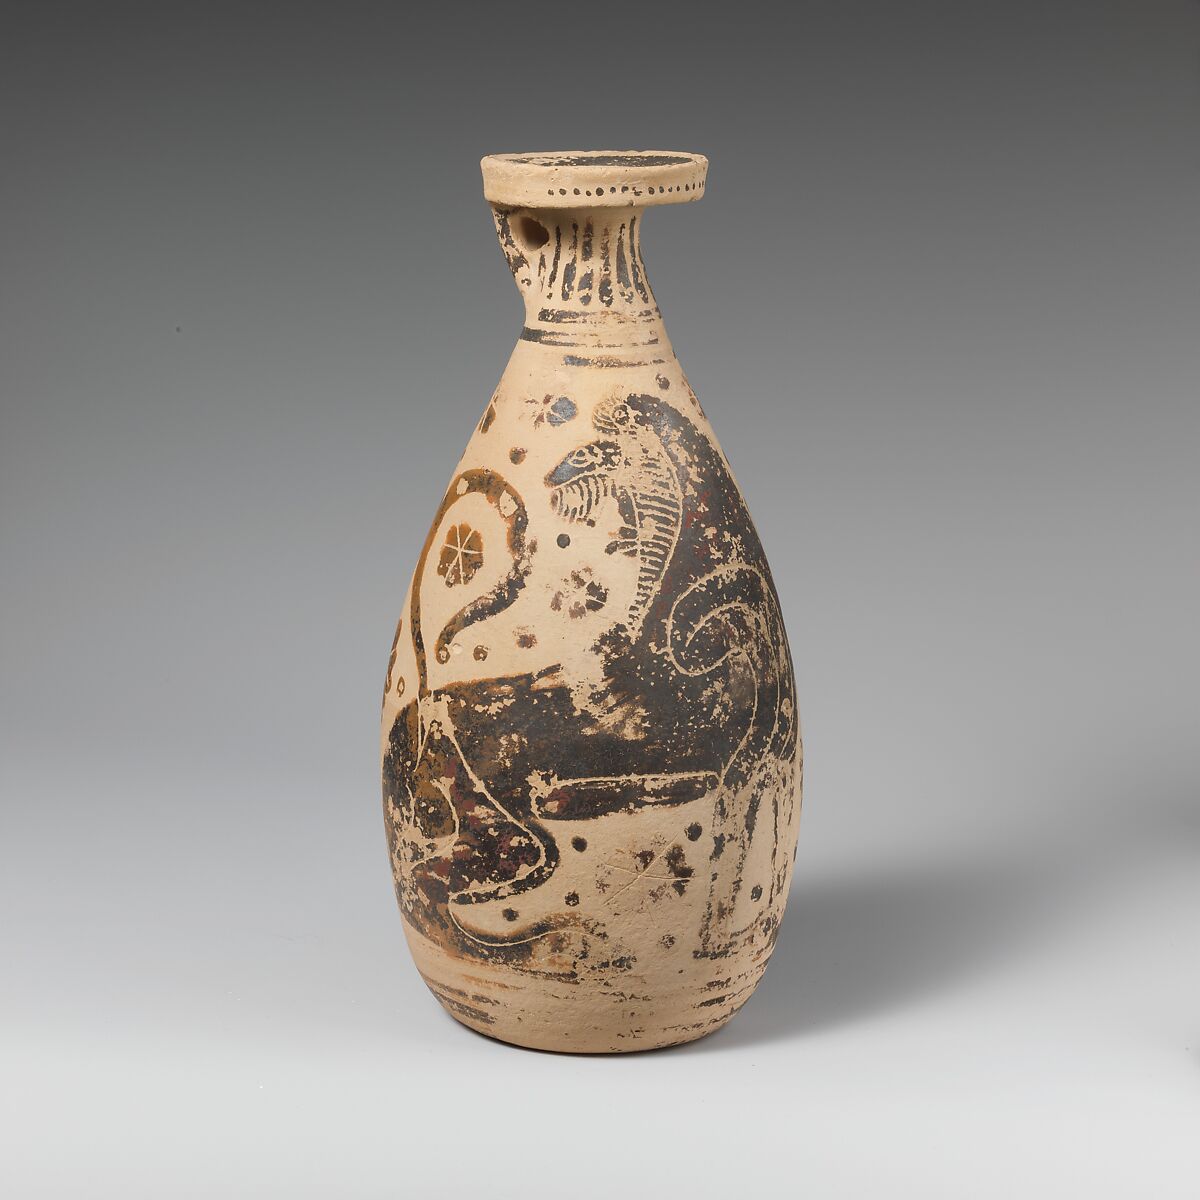 Terracotta alabastron (perfume vase), Attributed to near the Laurion Painter, Terracotta, Greek, Corinthian 